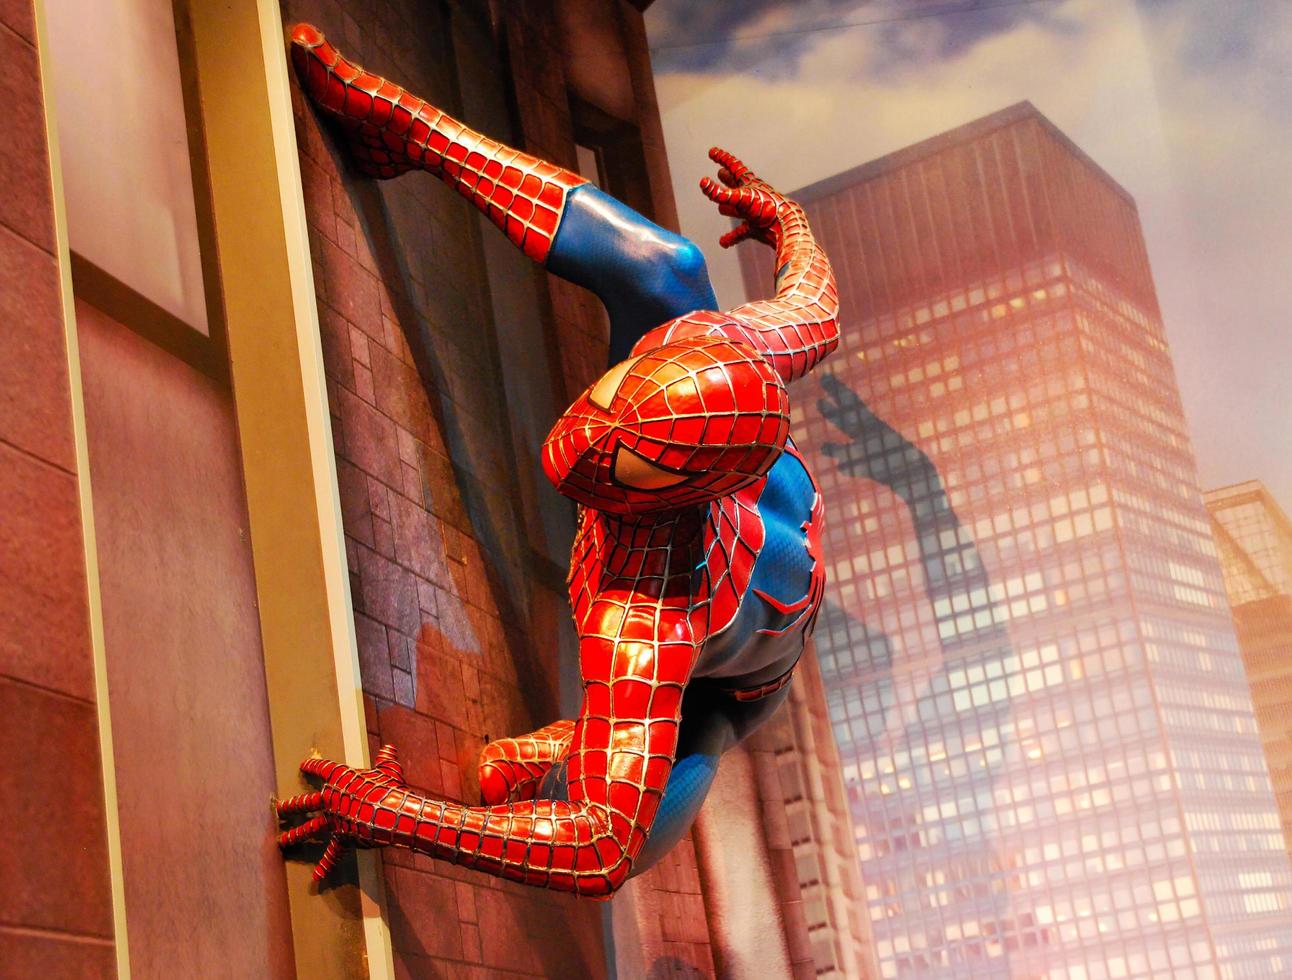 London, England, Storbritannien, 2014 - den fantastiska spindelmannen statyn i naturlig storlek i Madame Tussauds museum foto